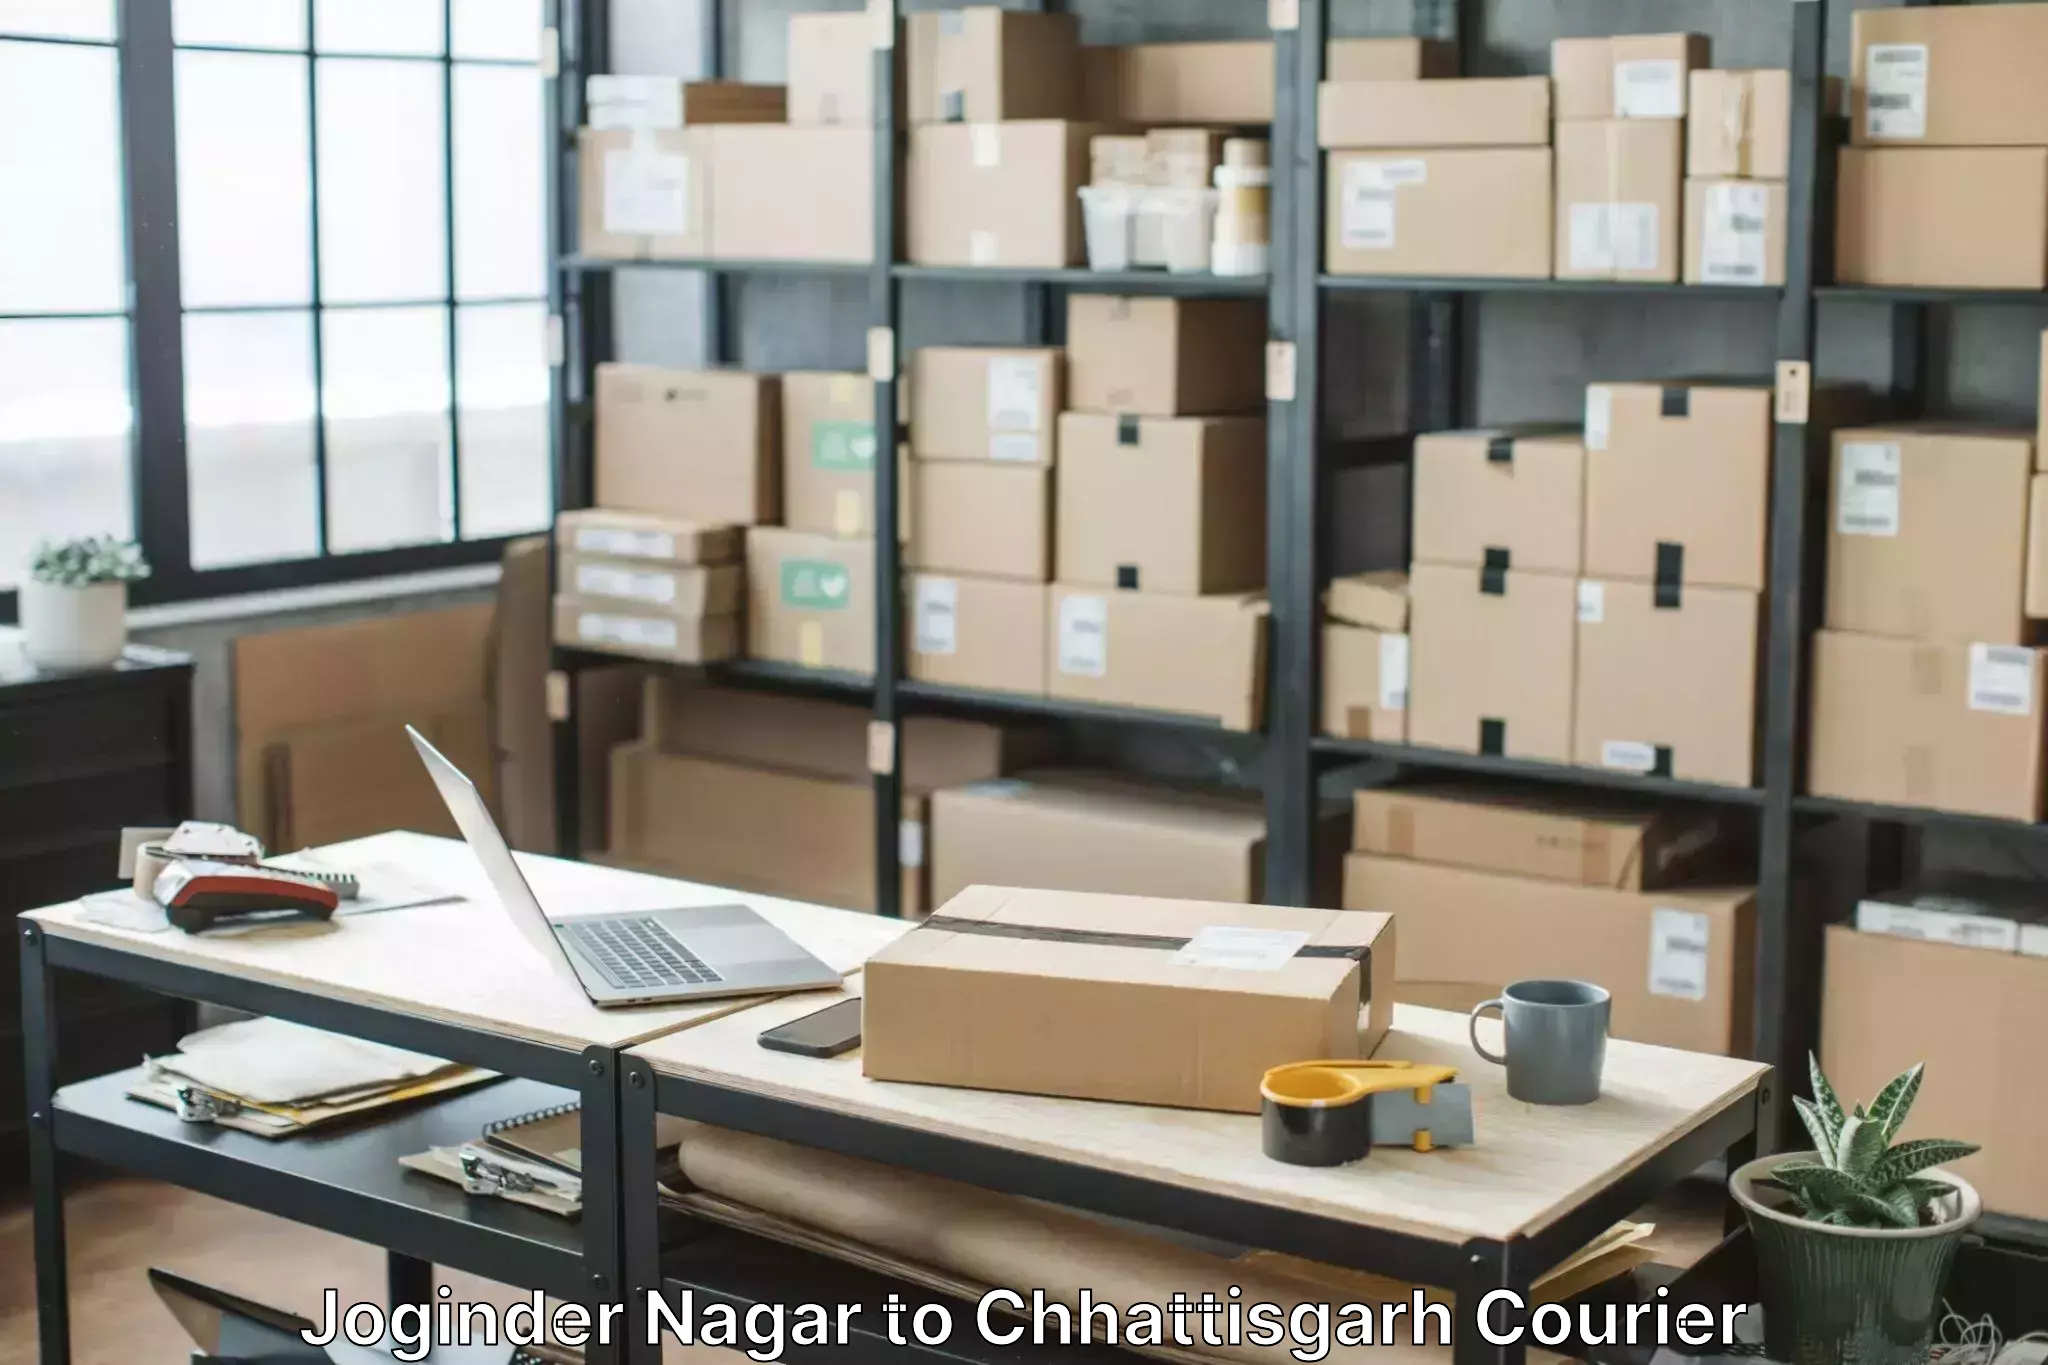 Trusted relocation experts Joginder Nagar to Chhattisgarh